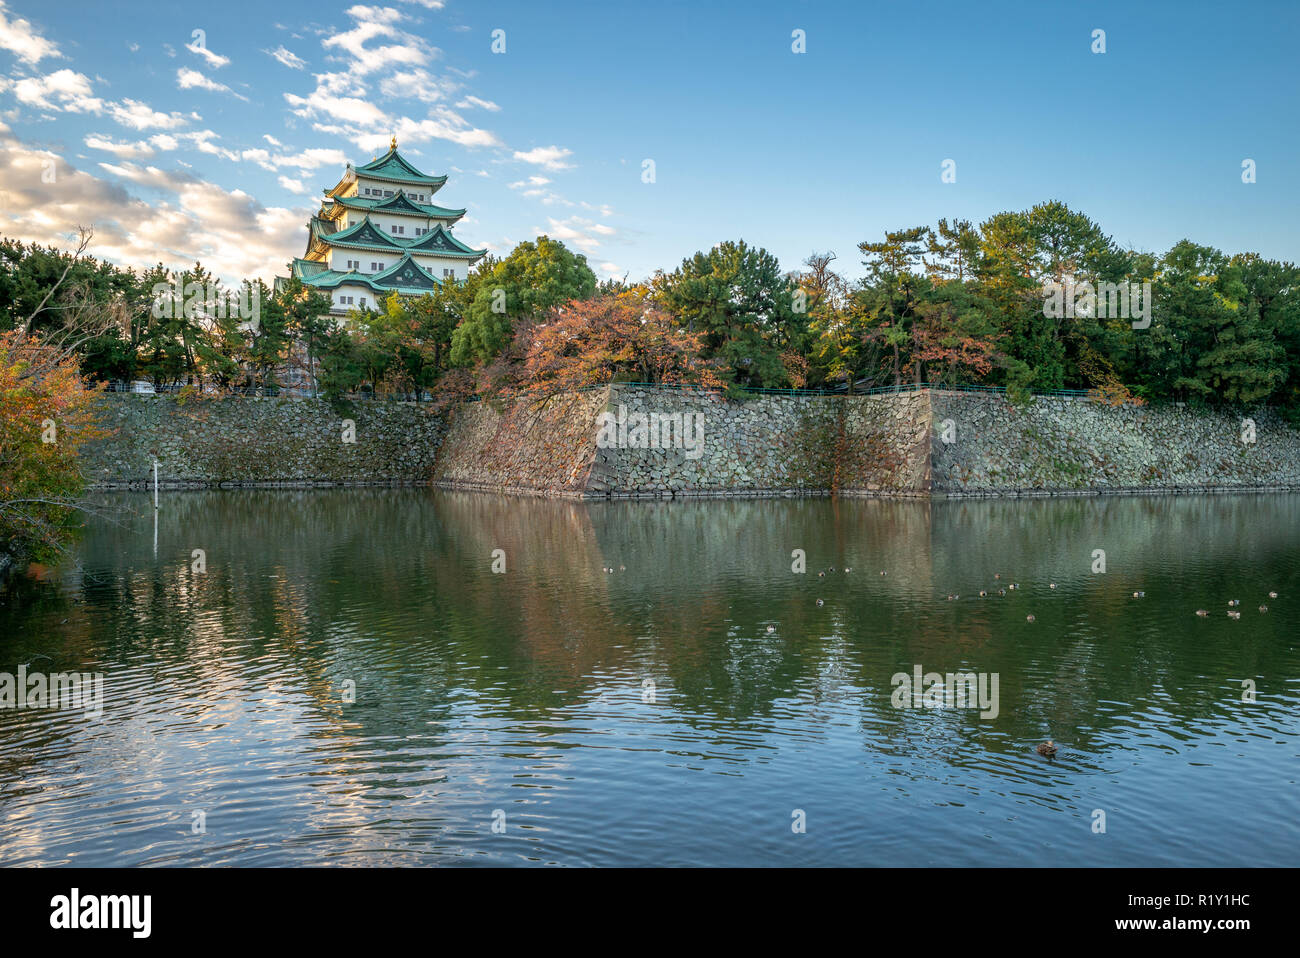 Il Castello Nagoya, un castello giapponese in Nagoya, Giappone Foto Stock